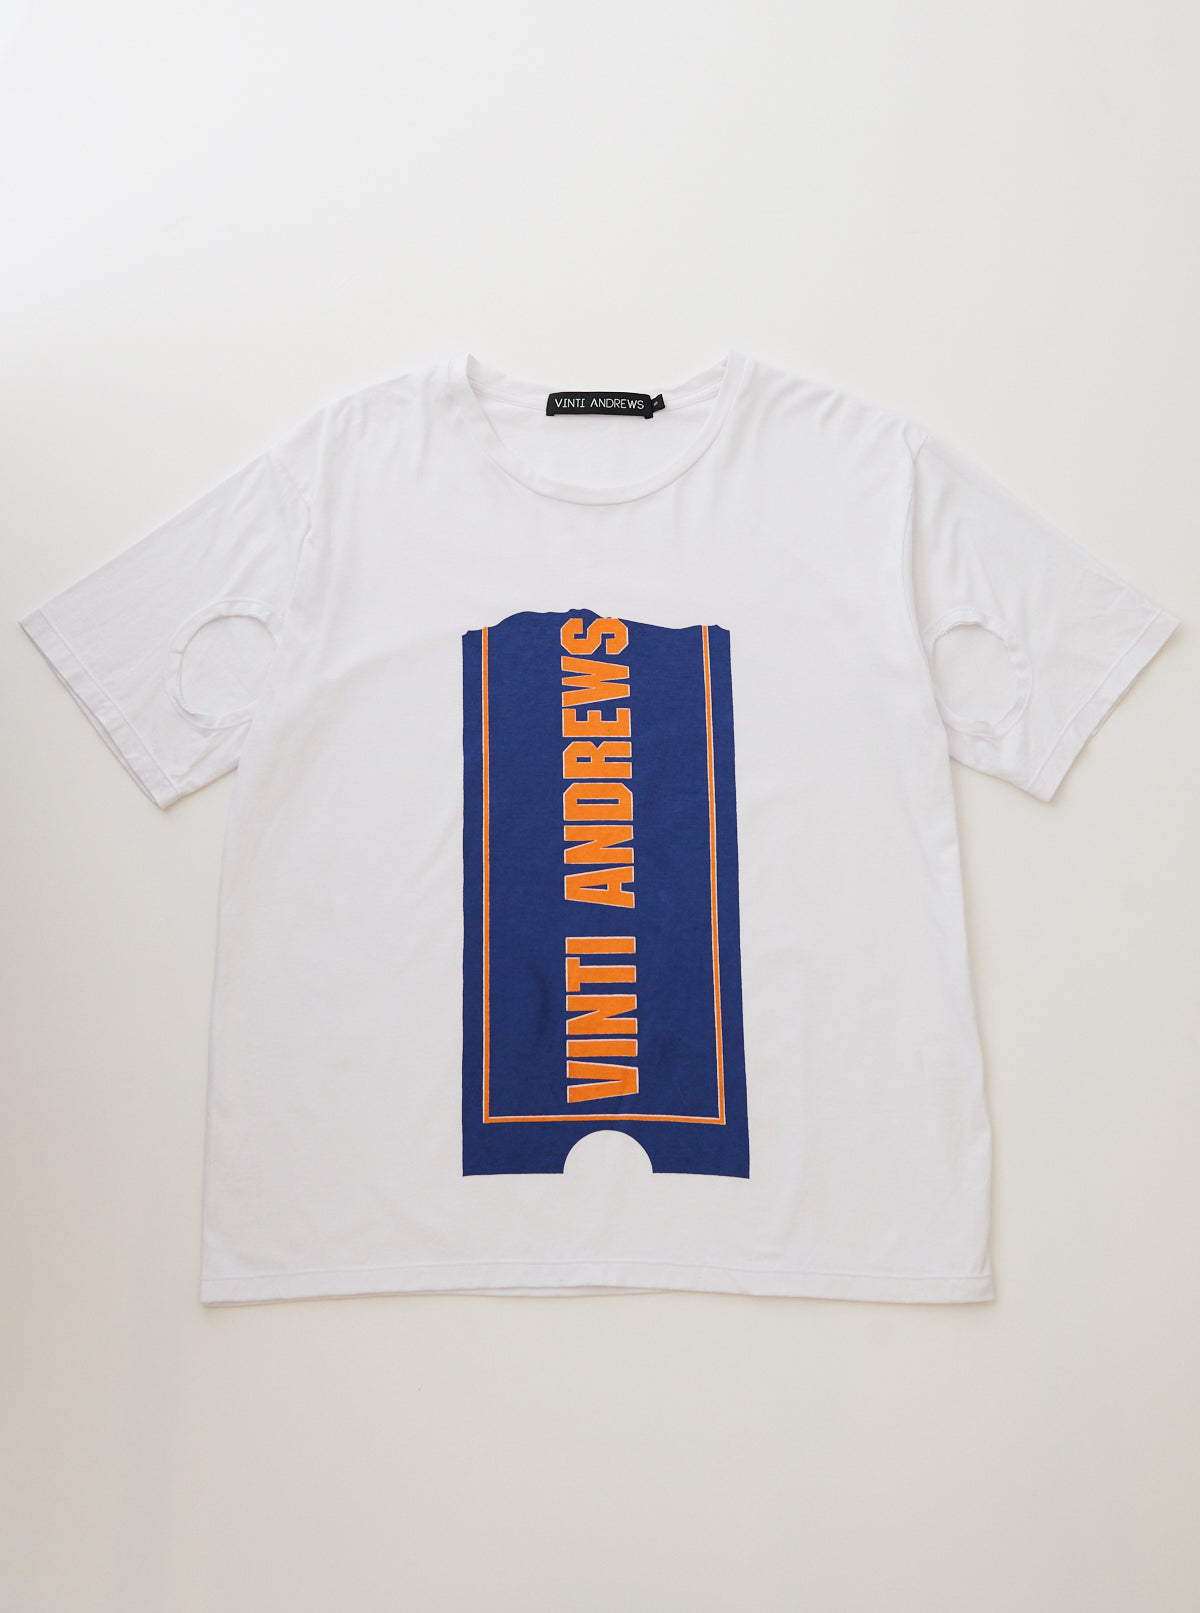 Vinti Andrews Tag Printed T-Shirt